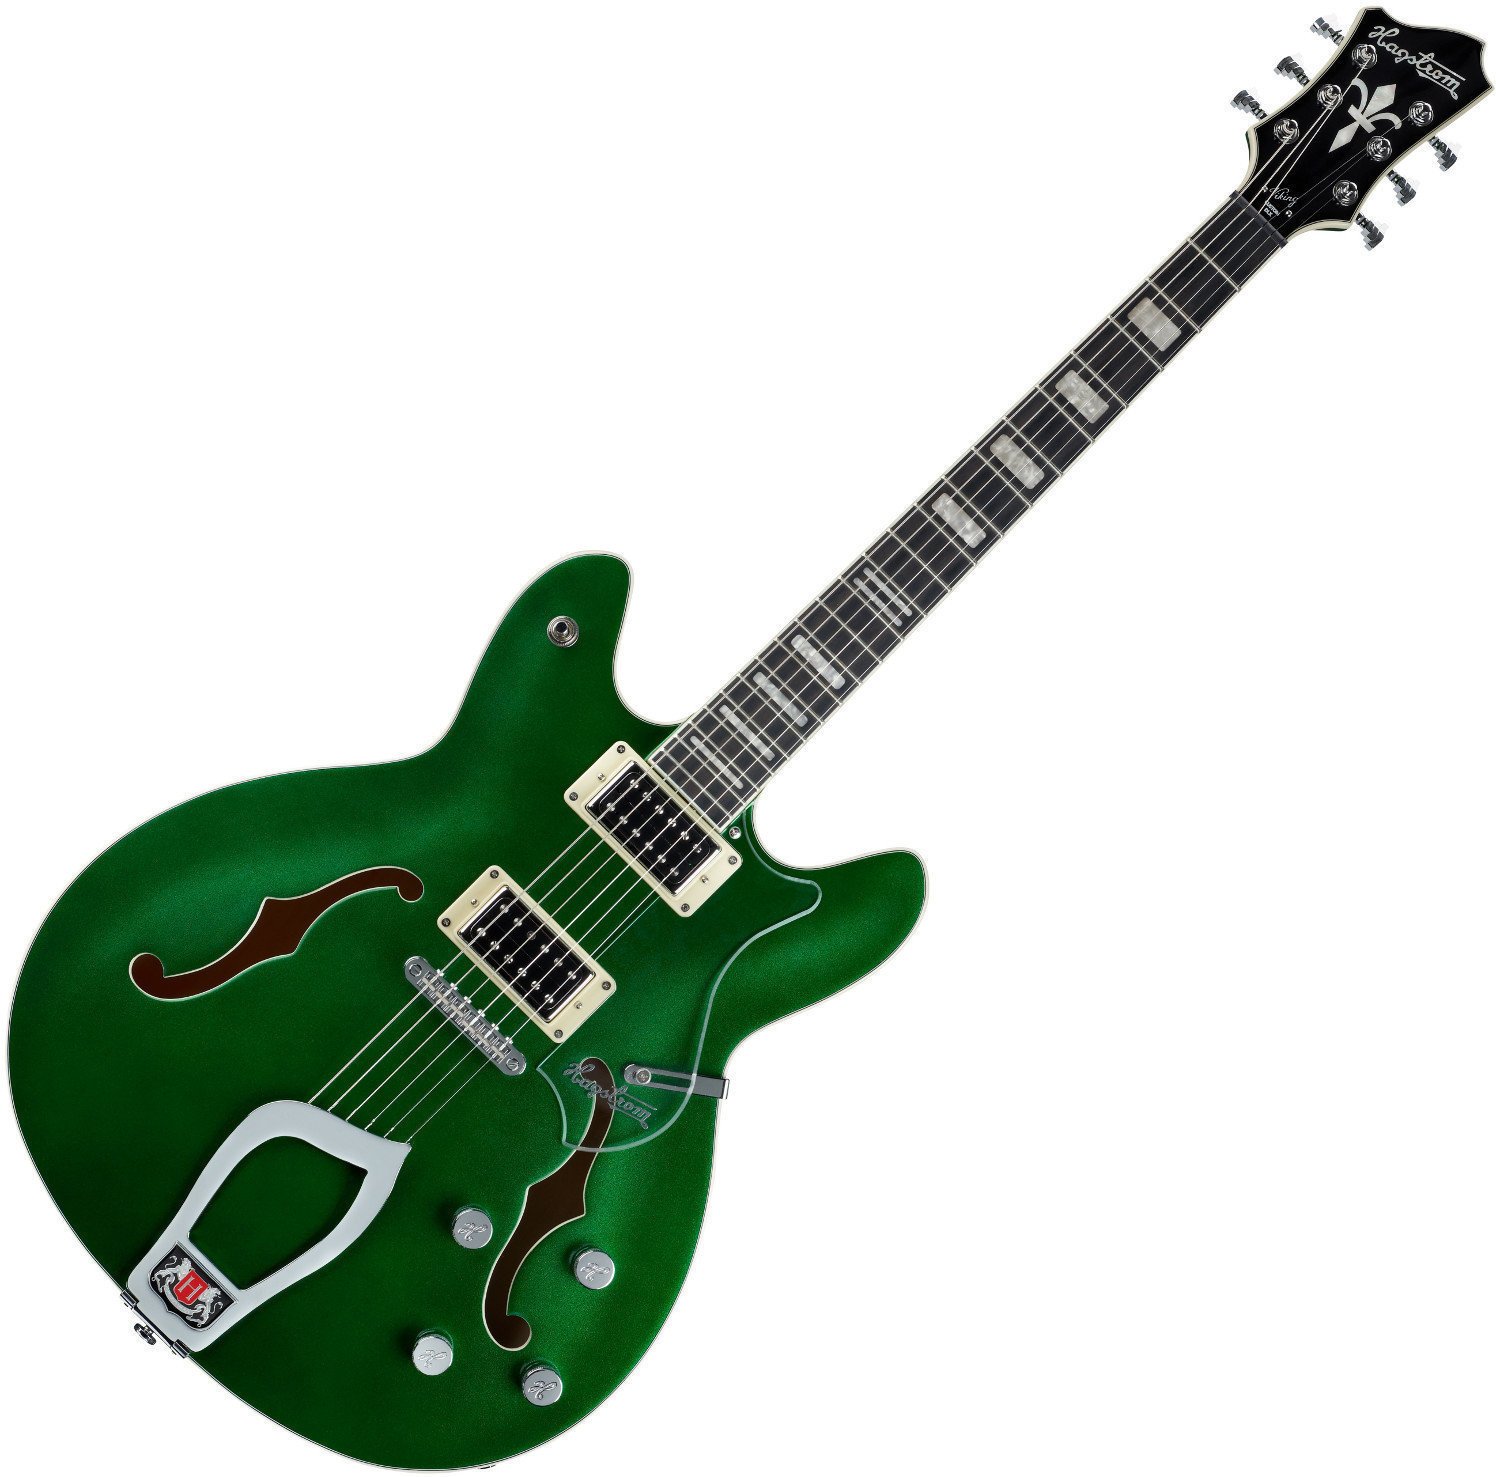 Semiakustická gitara Hagstrom Viking Deluxe Custom Limited Edition Emerald Green